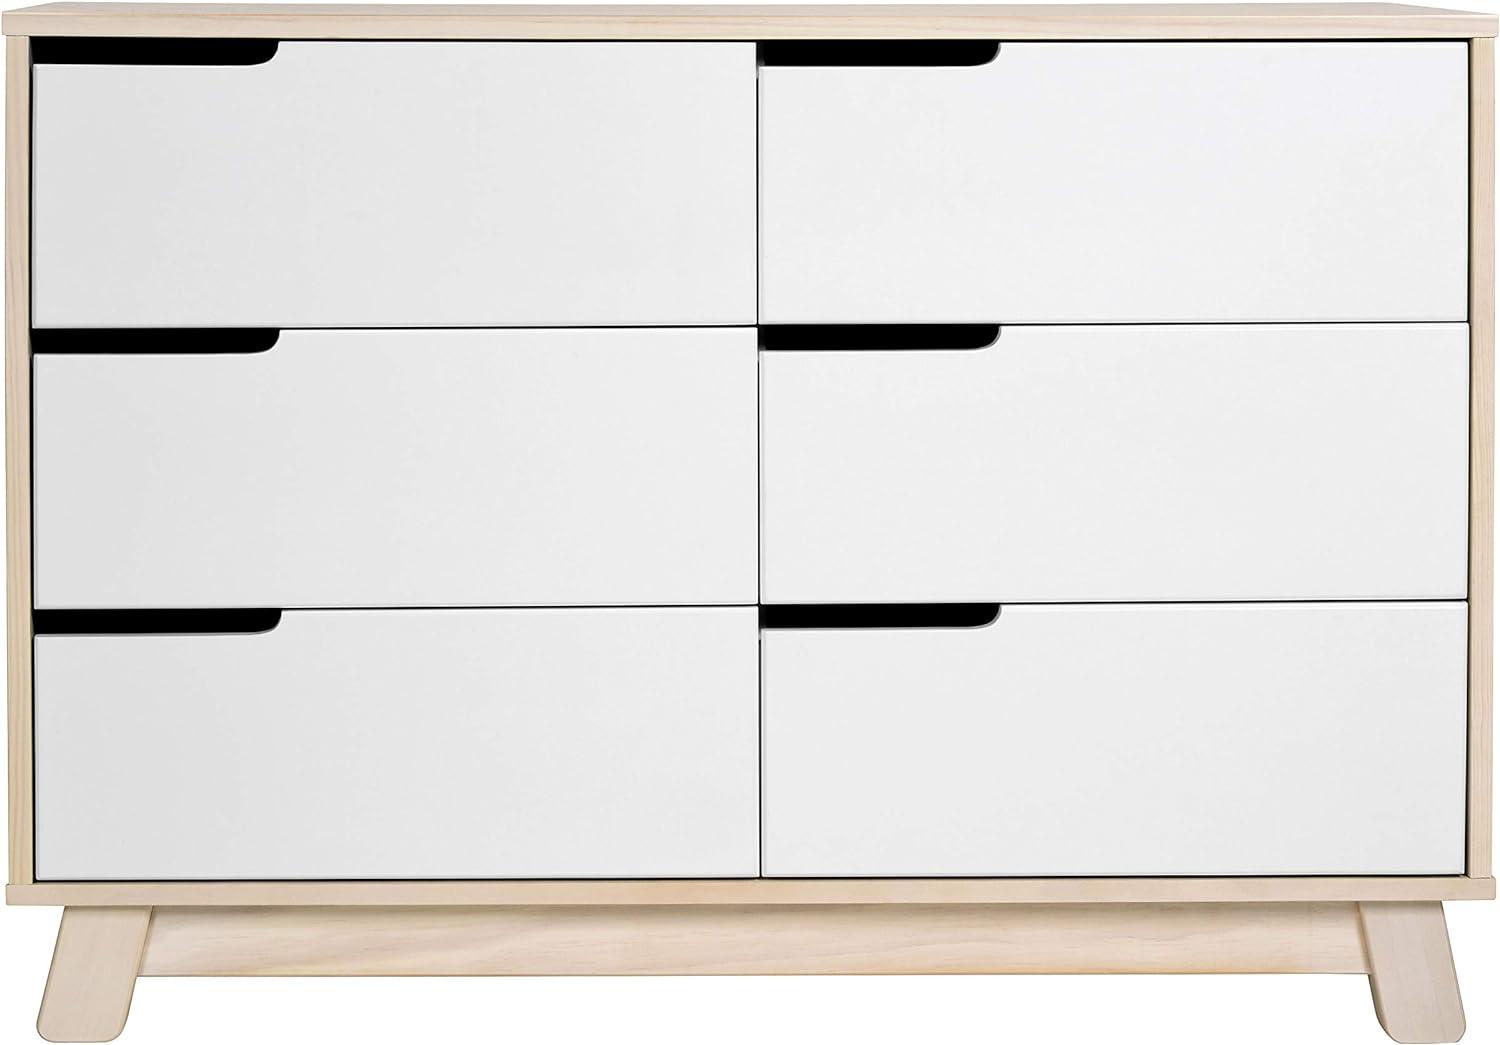 Hudson Mid-Century Modern 6-Drawer Dresser in Washed Natural/White